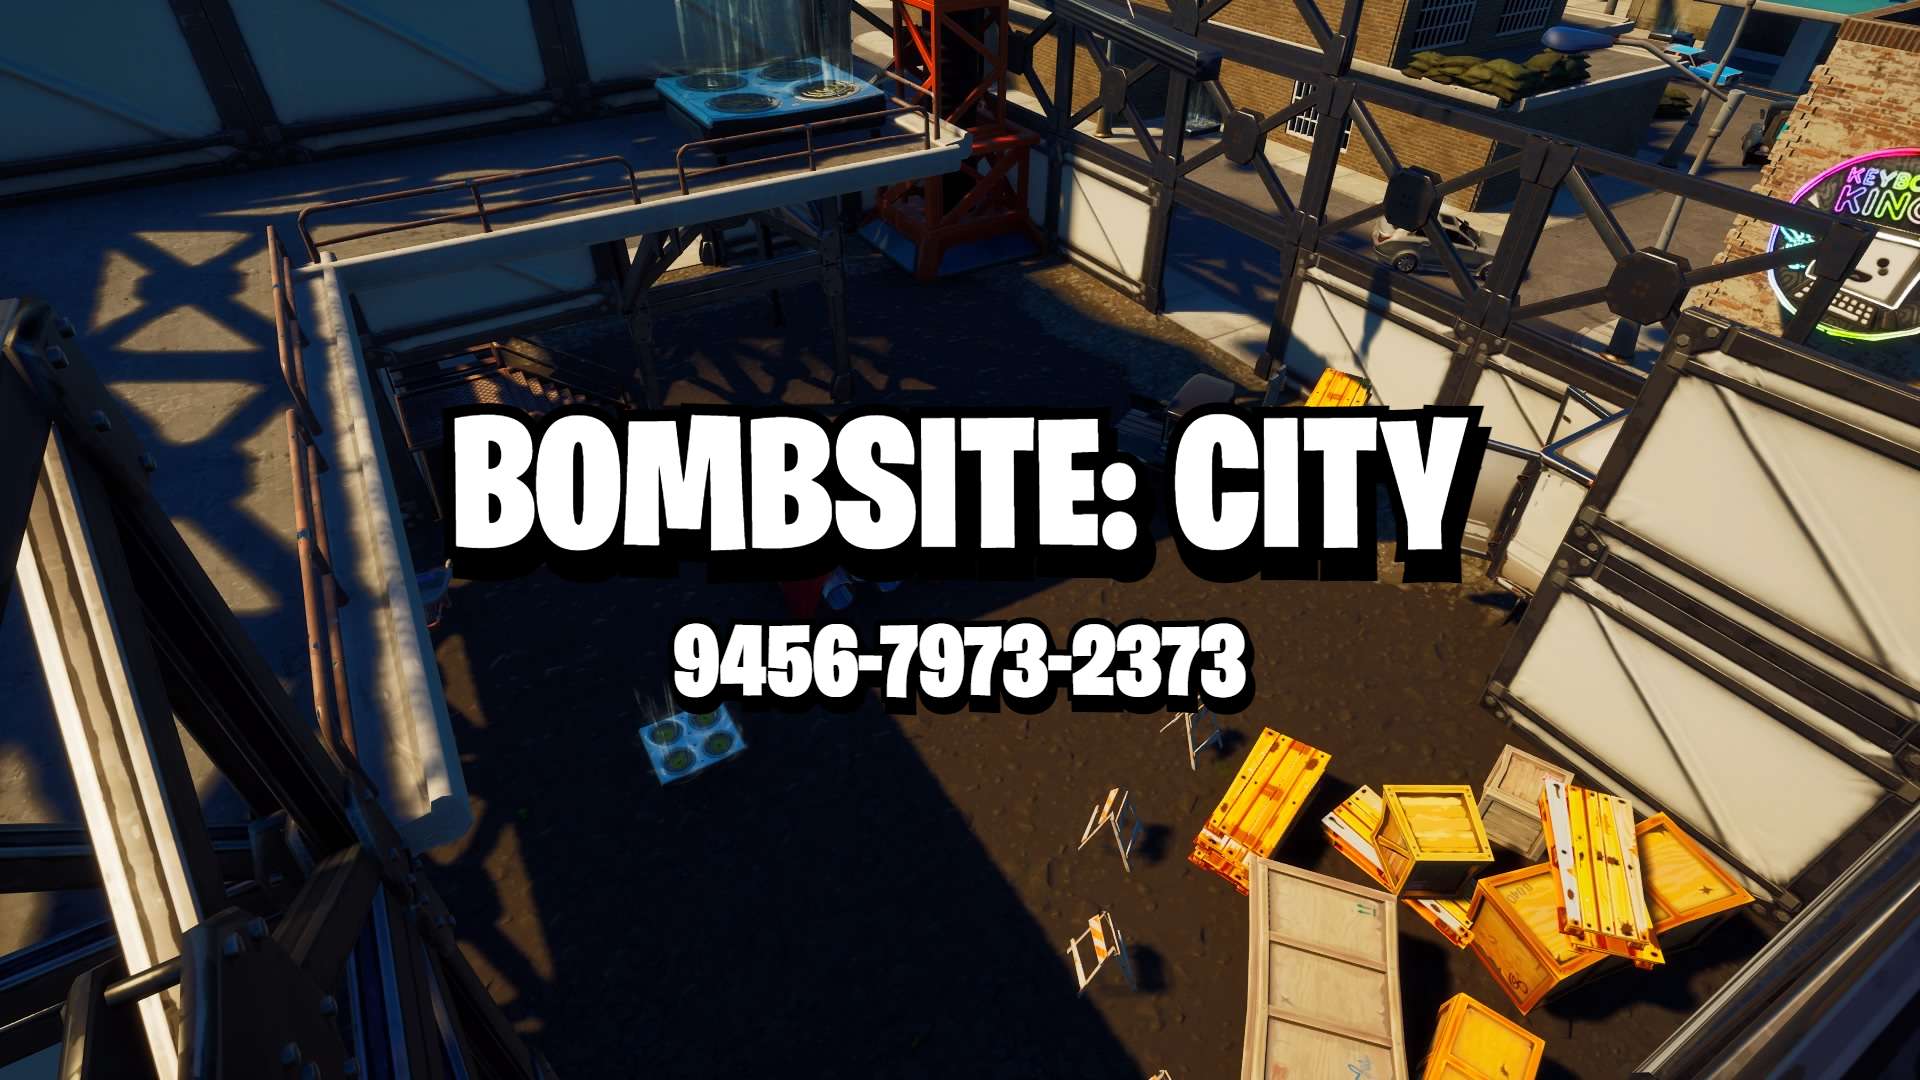 BOMBSITE: CITY